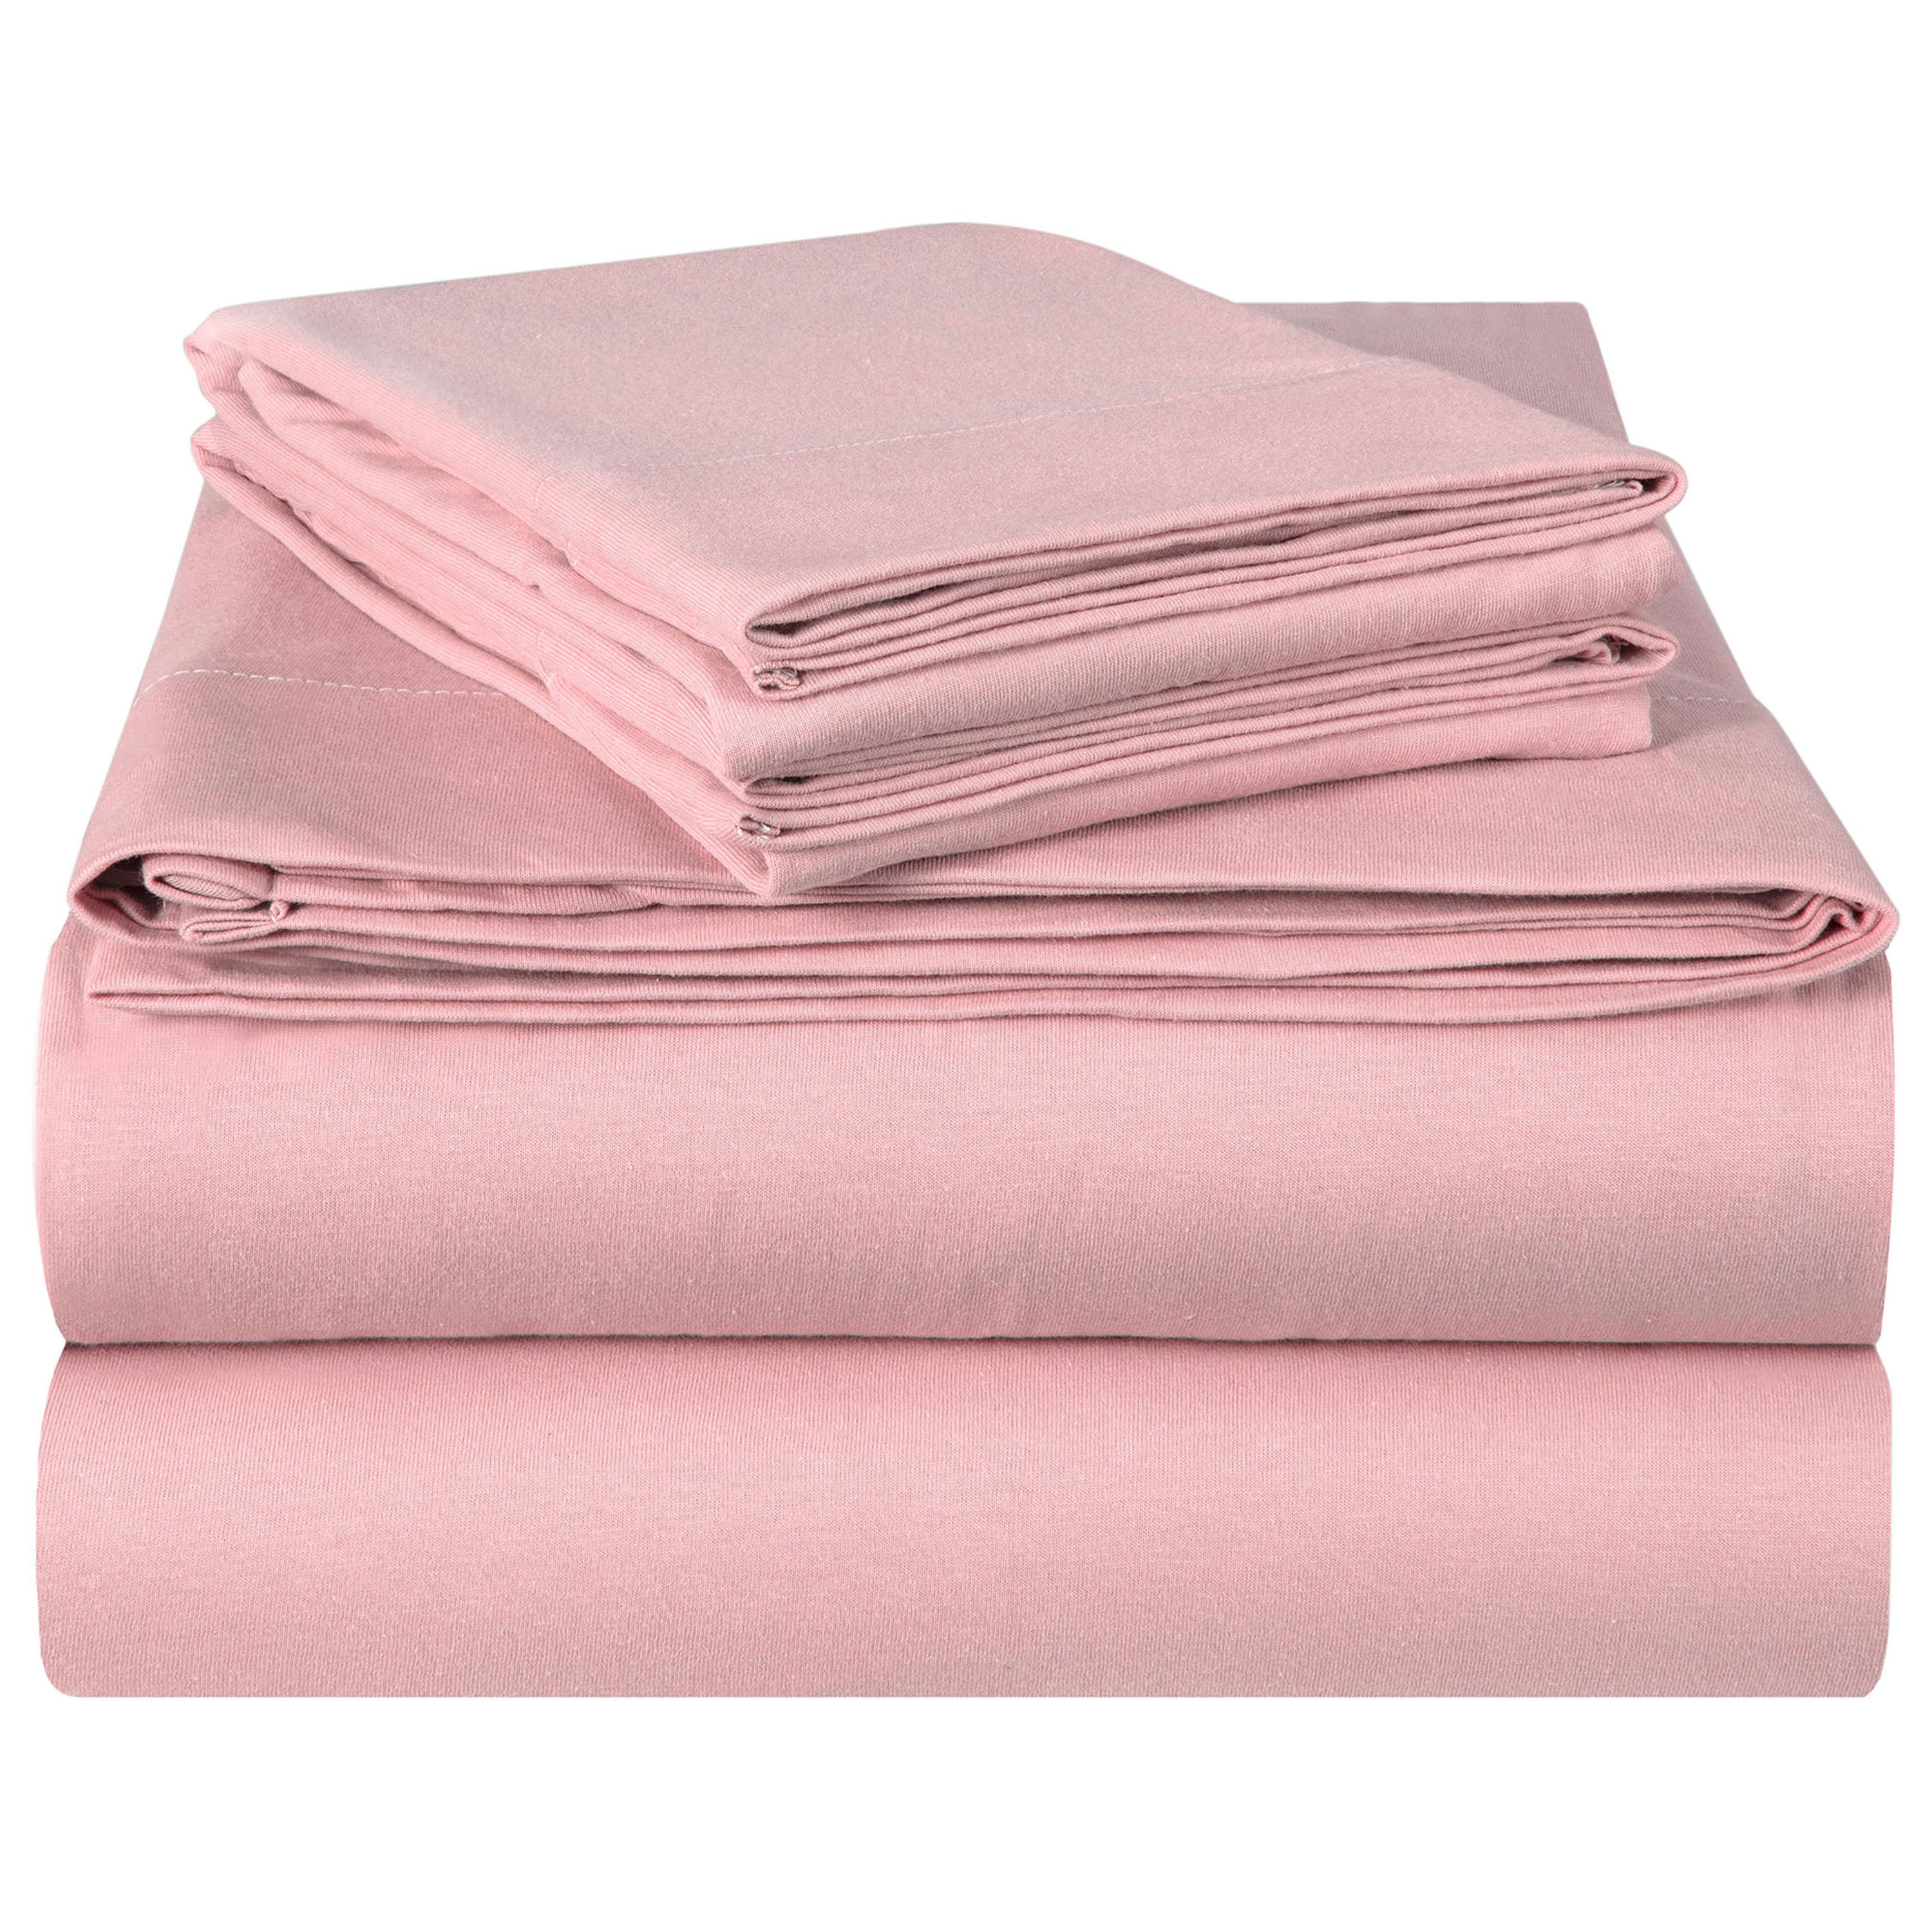 EnvioHome Quality Knit 100 Cotton Jersey Bed Sheet Set Full, Light